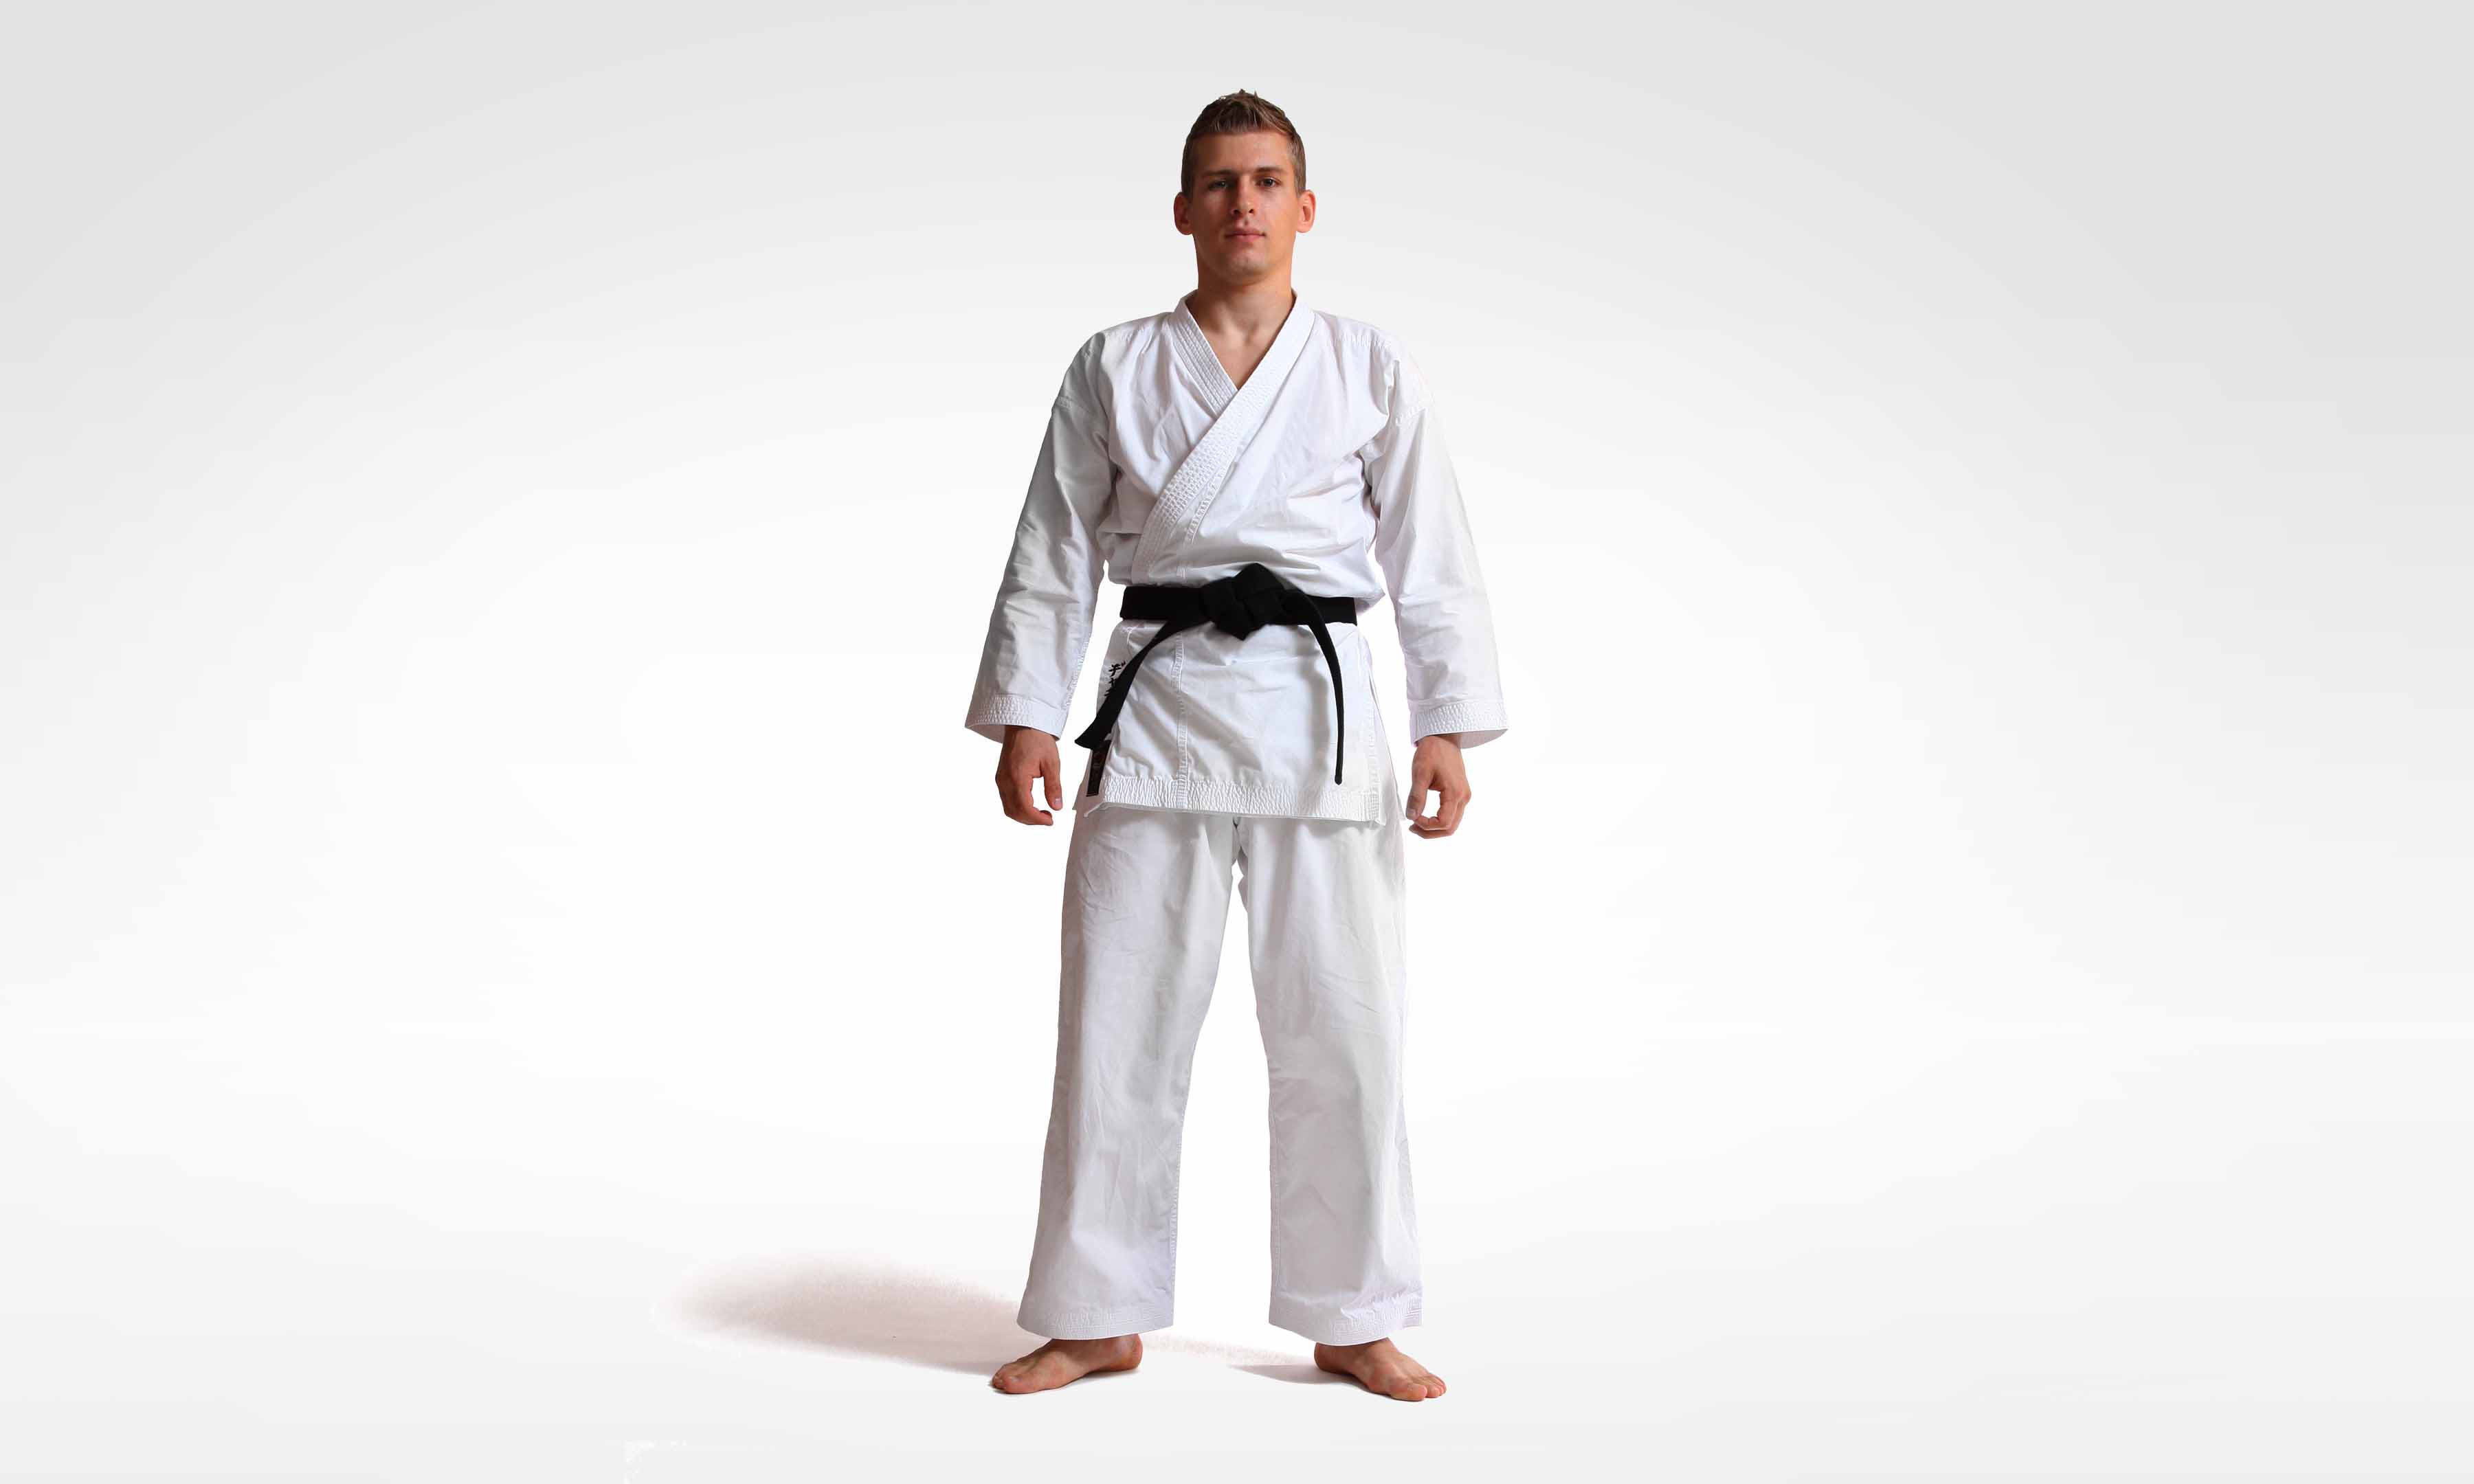 Karate Master Igor Dyachenko